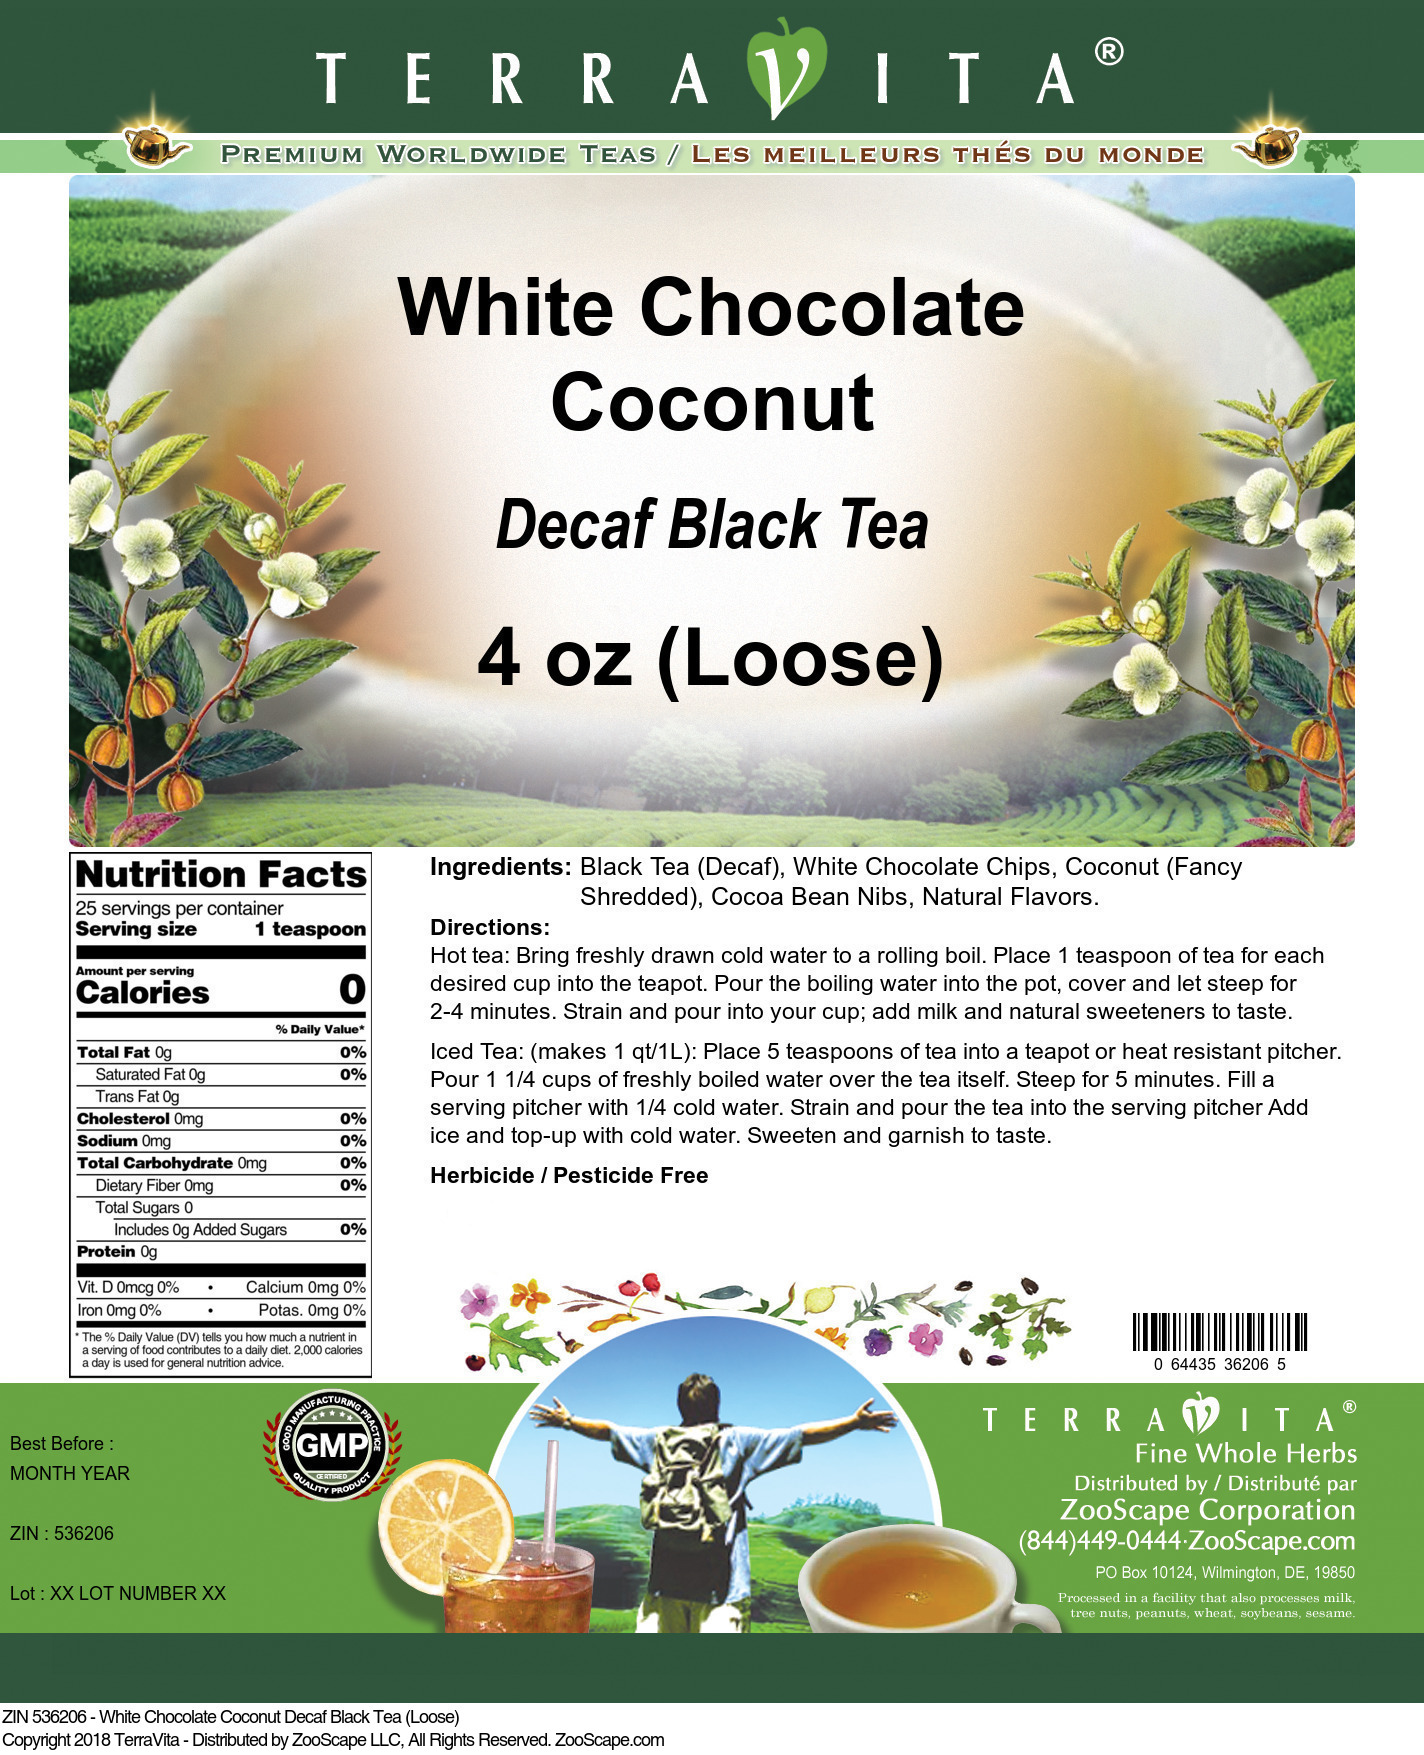 White Chocolate Coconut Decaf Black Tea (Loose) - Label